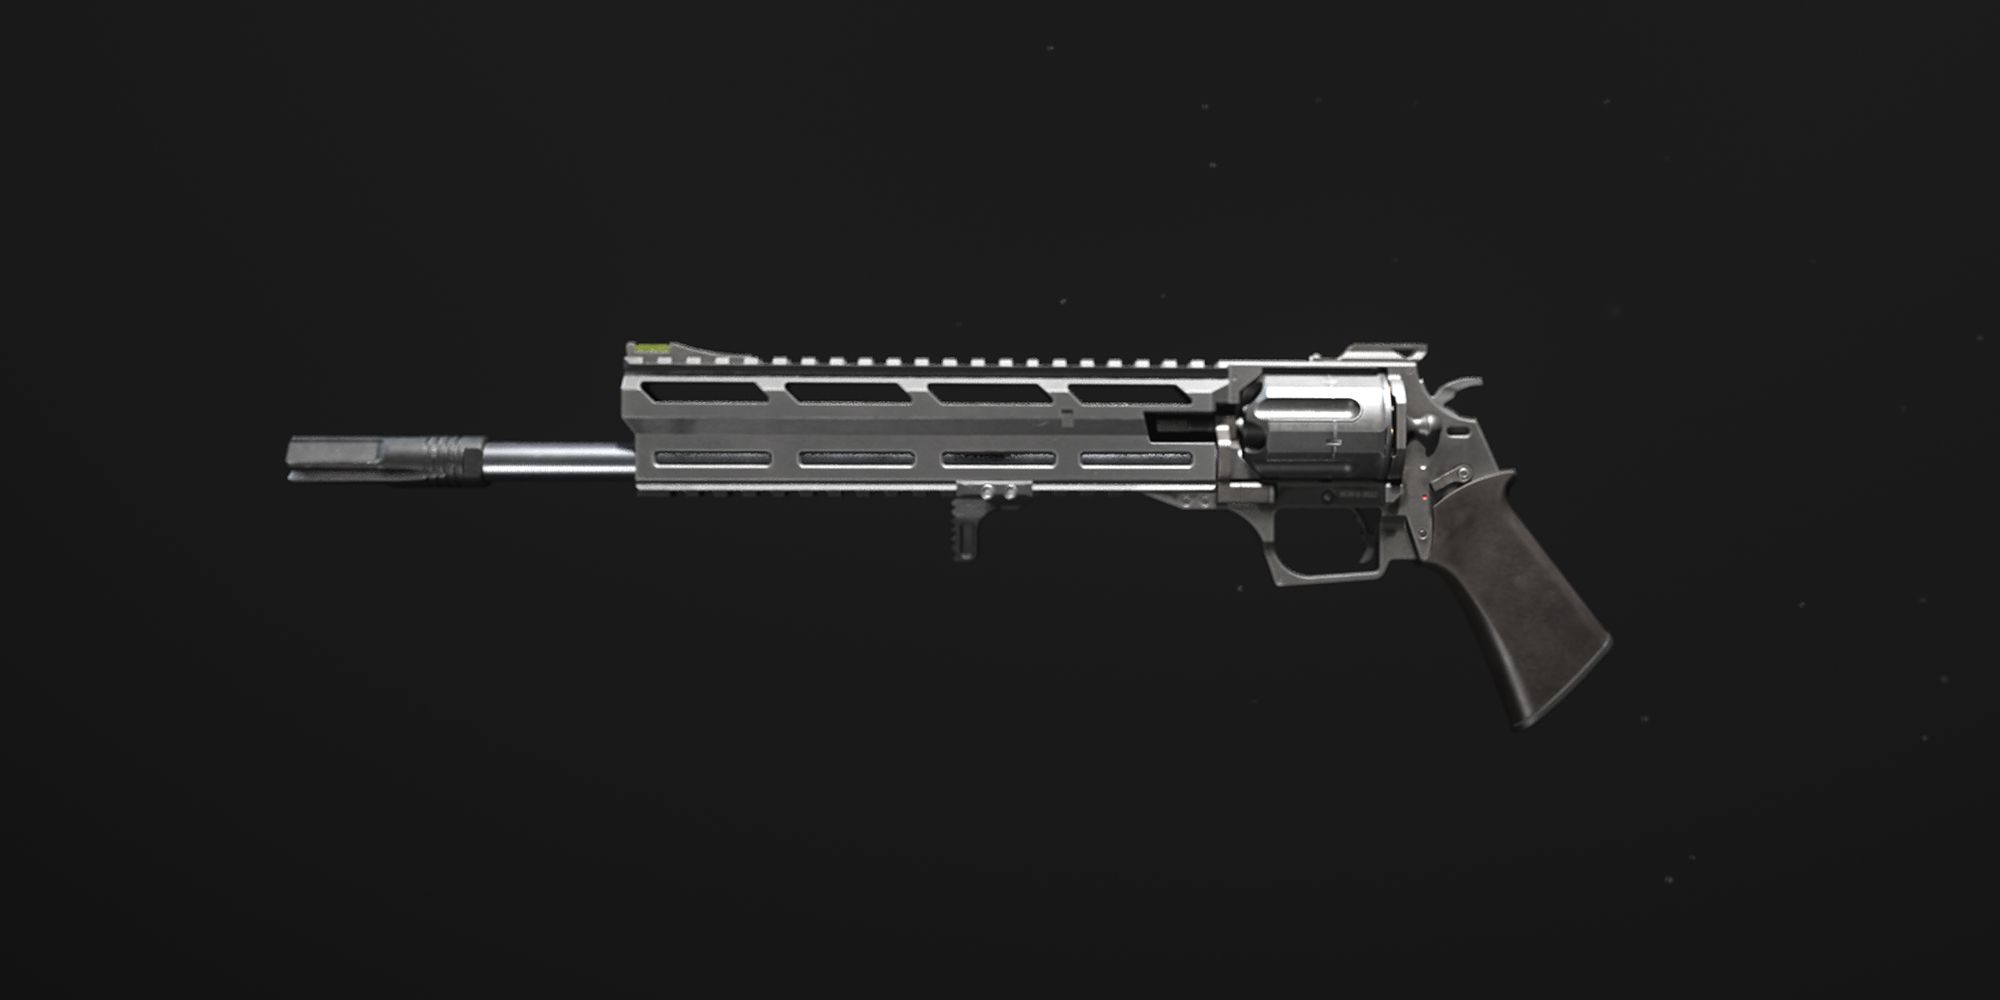 The Modern Warfare 3 Tyr revolver on the black gunsmith background.